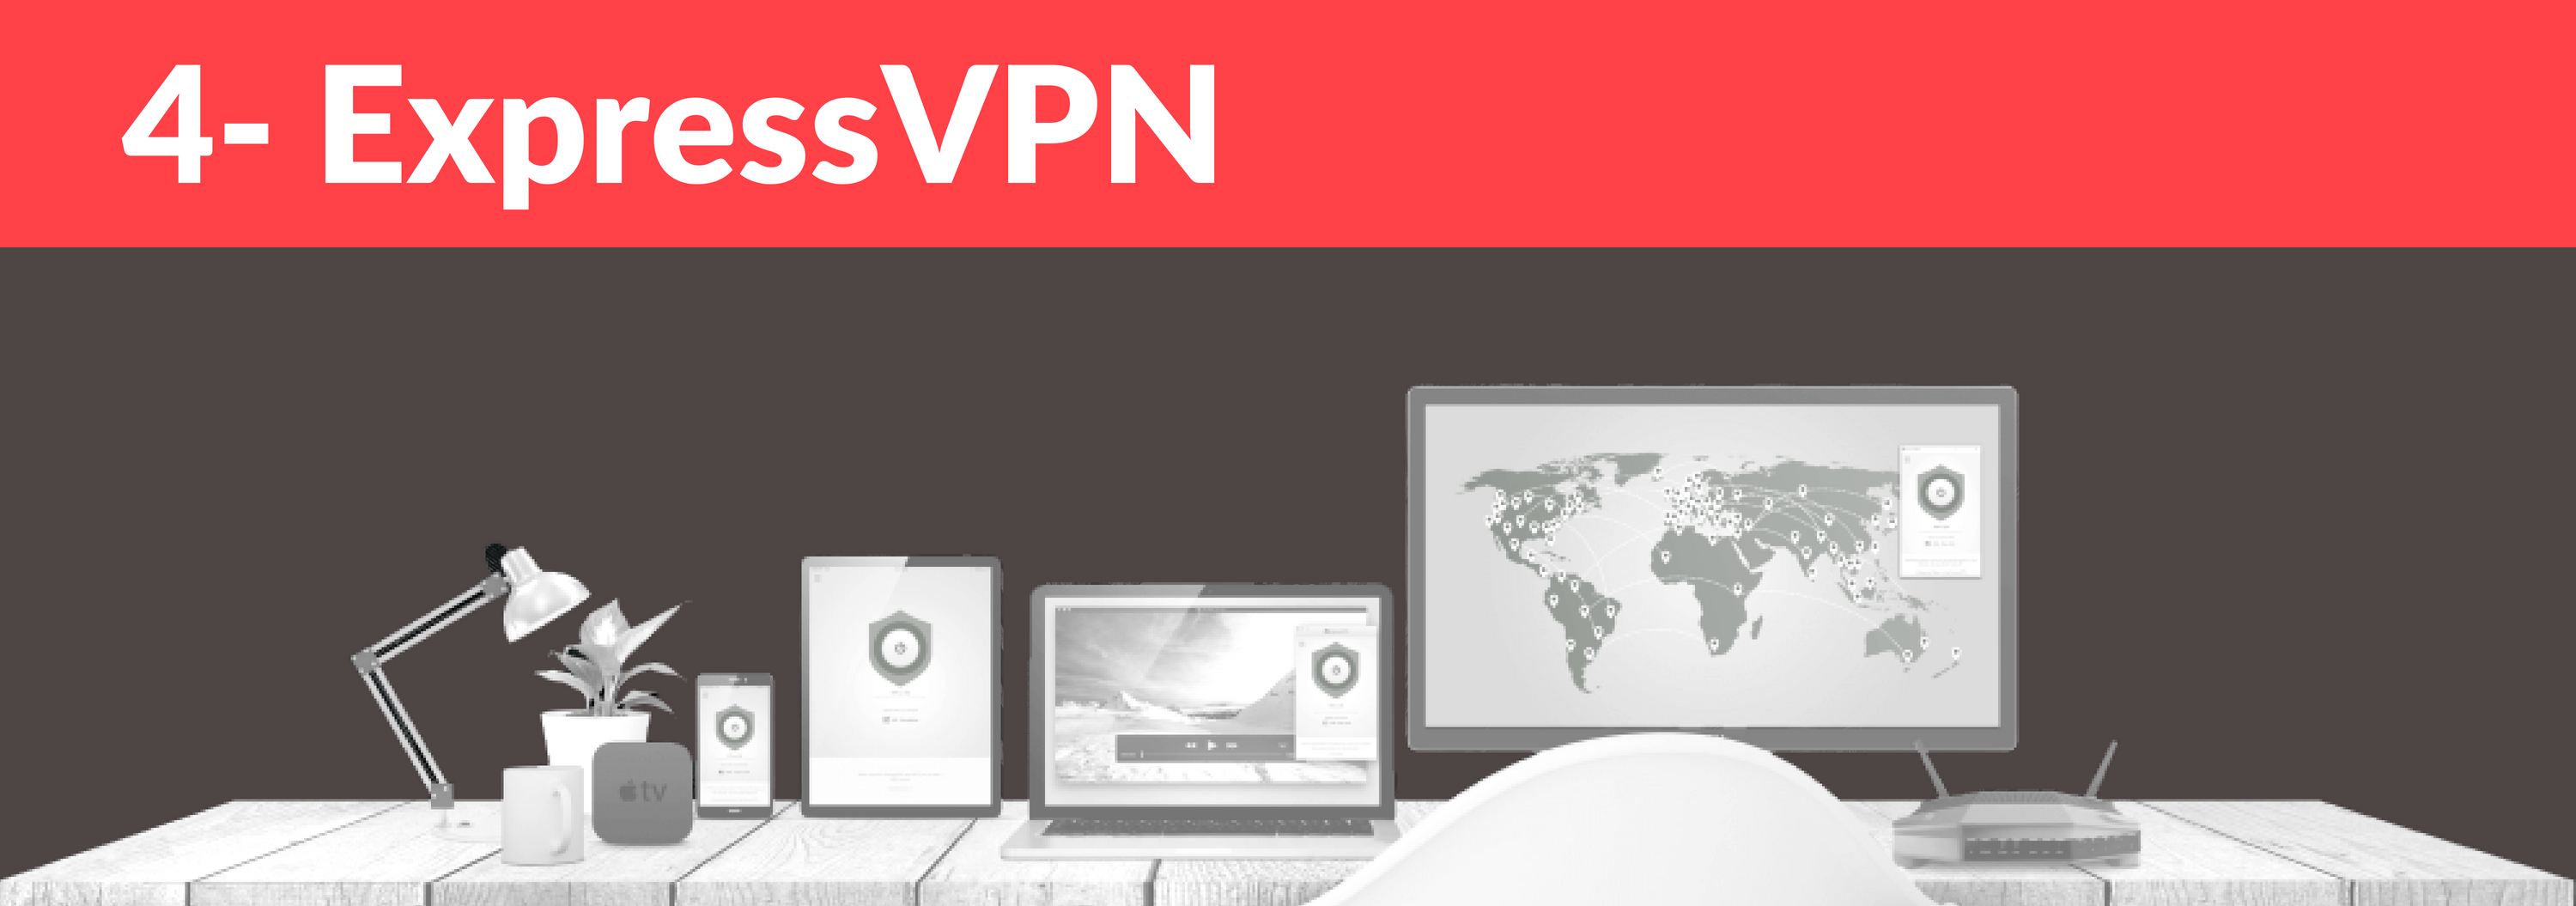 ExpressVPN - Best VPN (4)